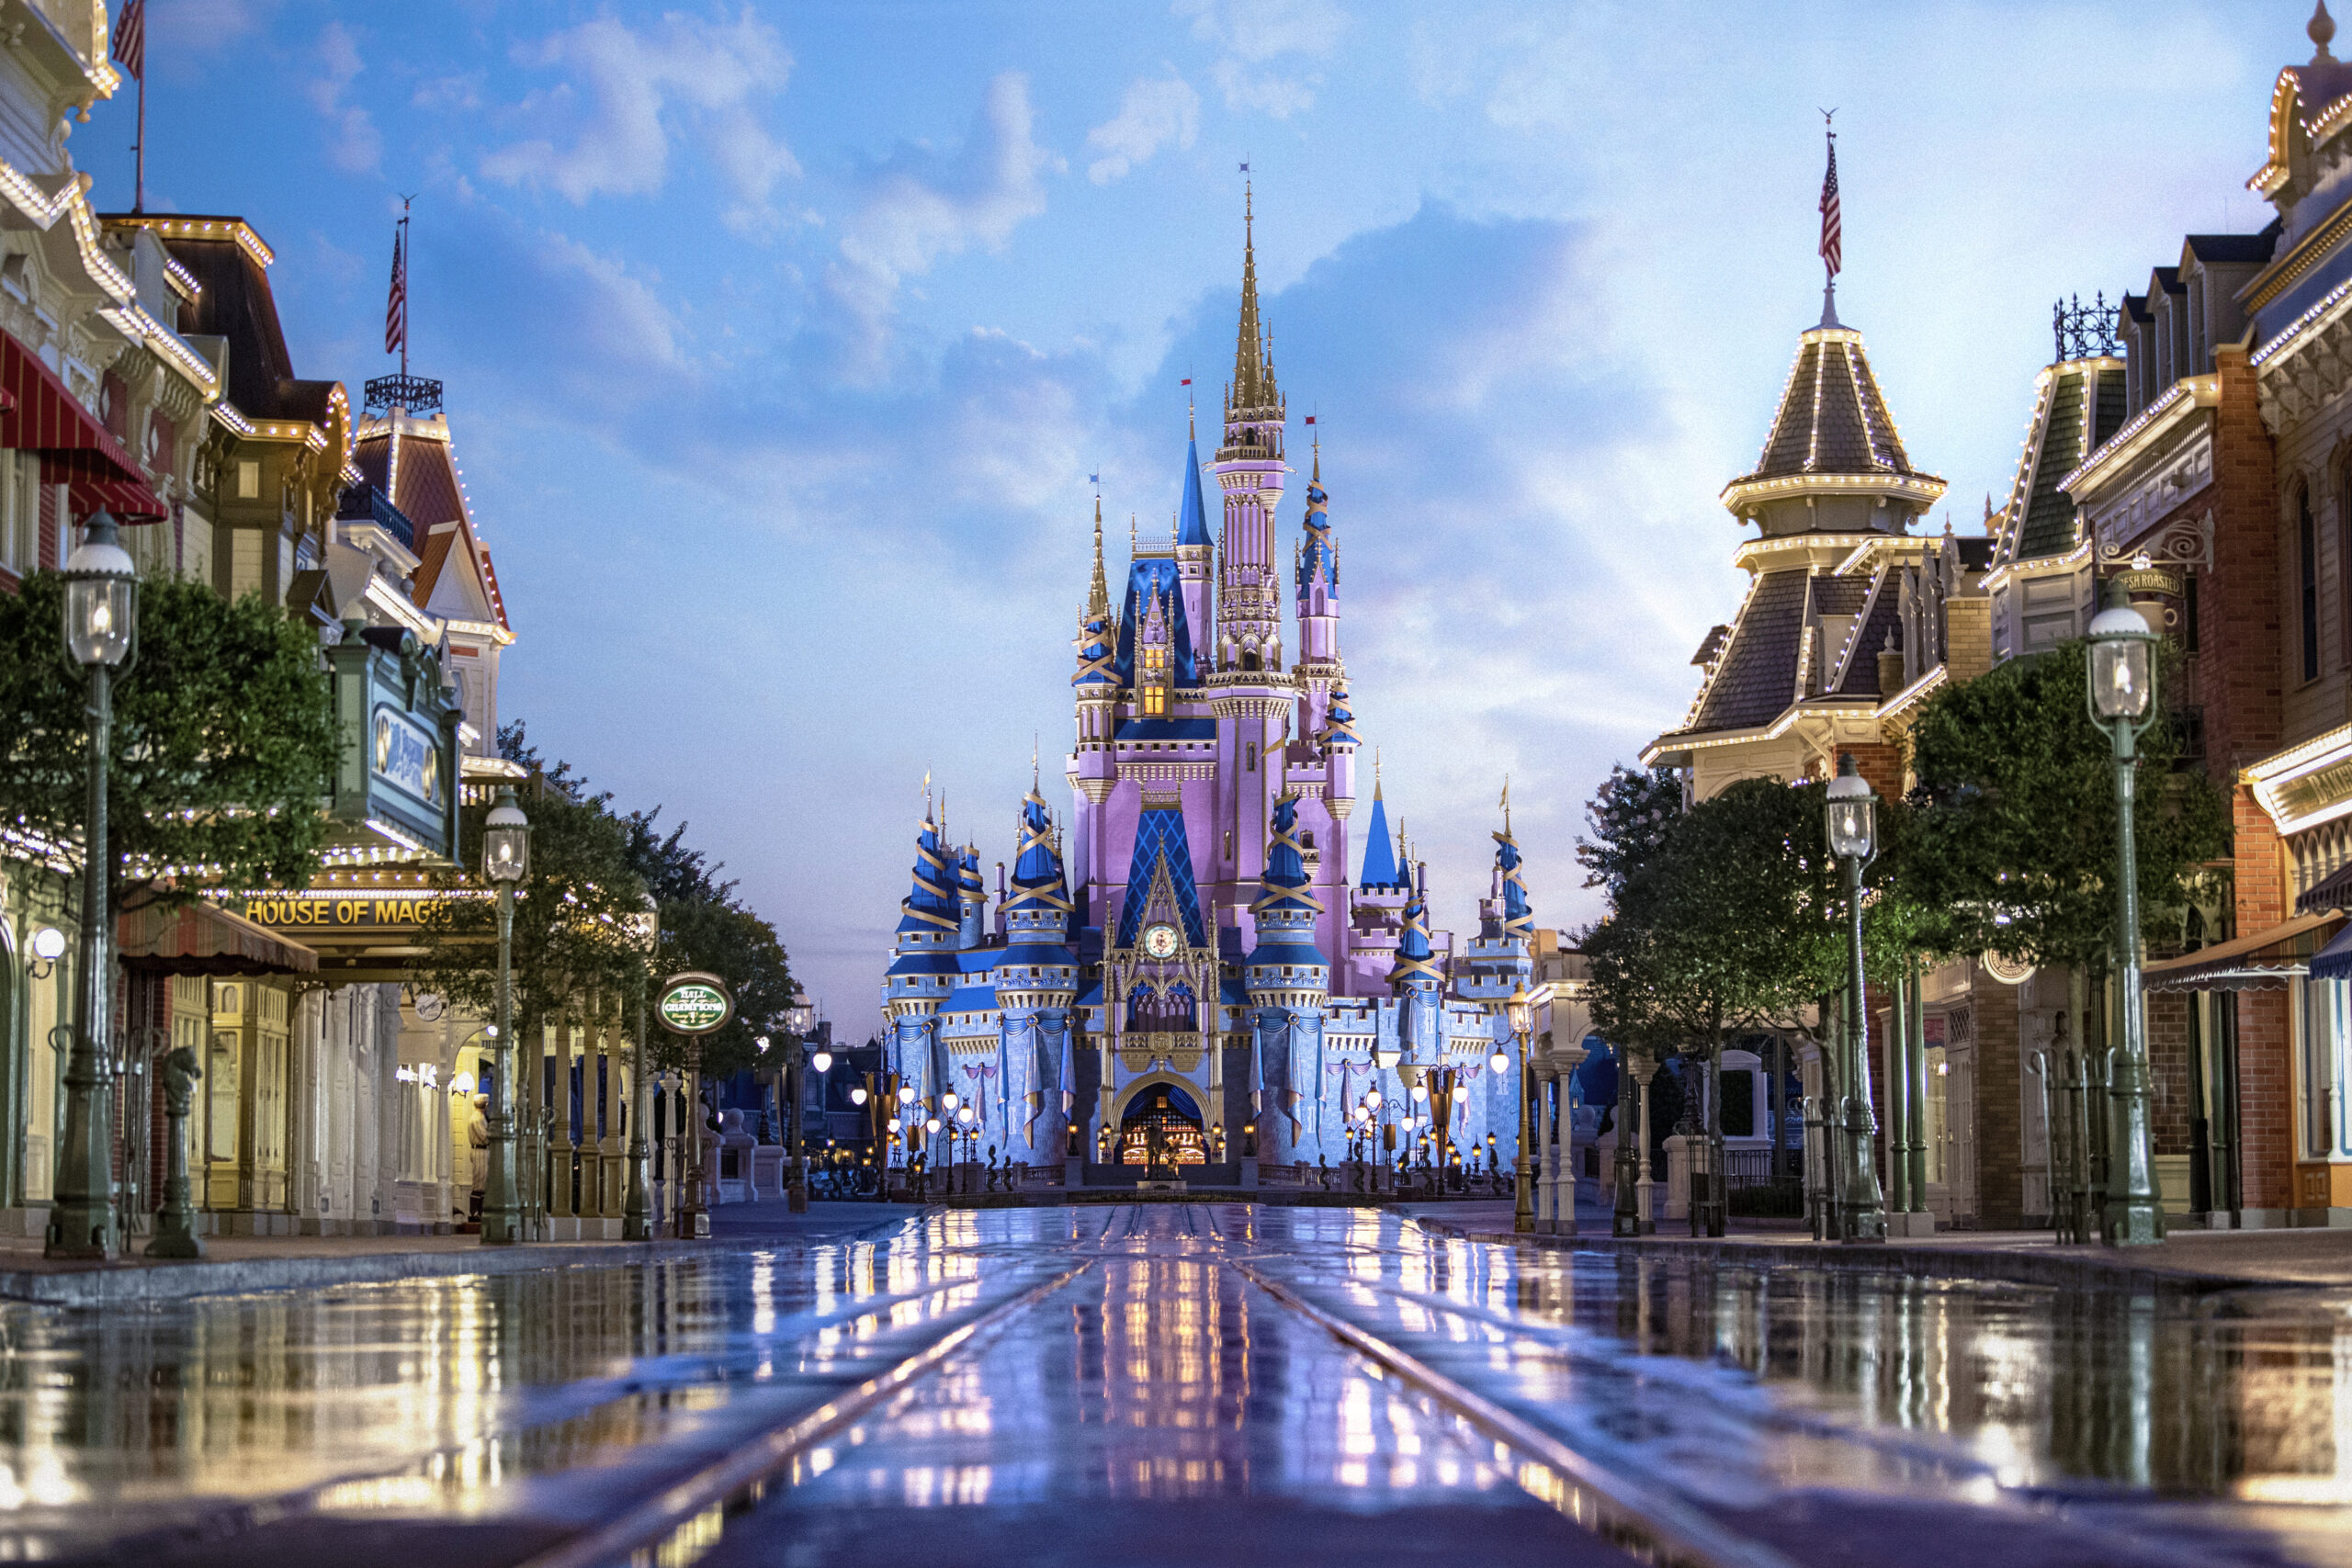 Séance d'informations vacances - Destinations Disney (24 mai)